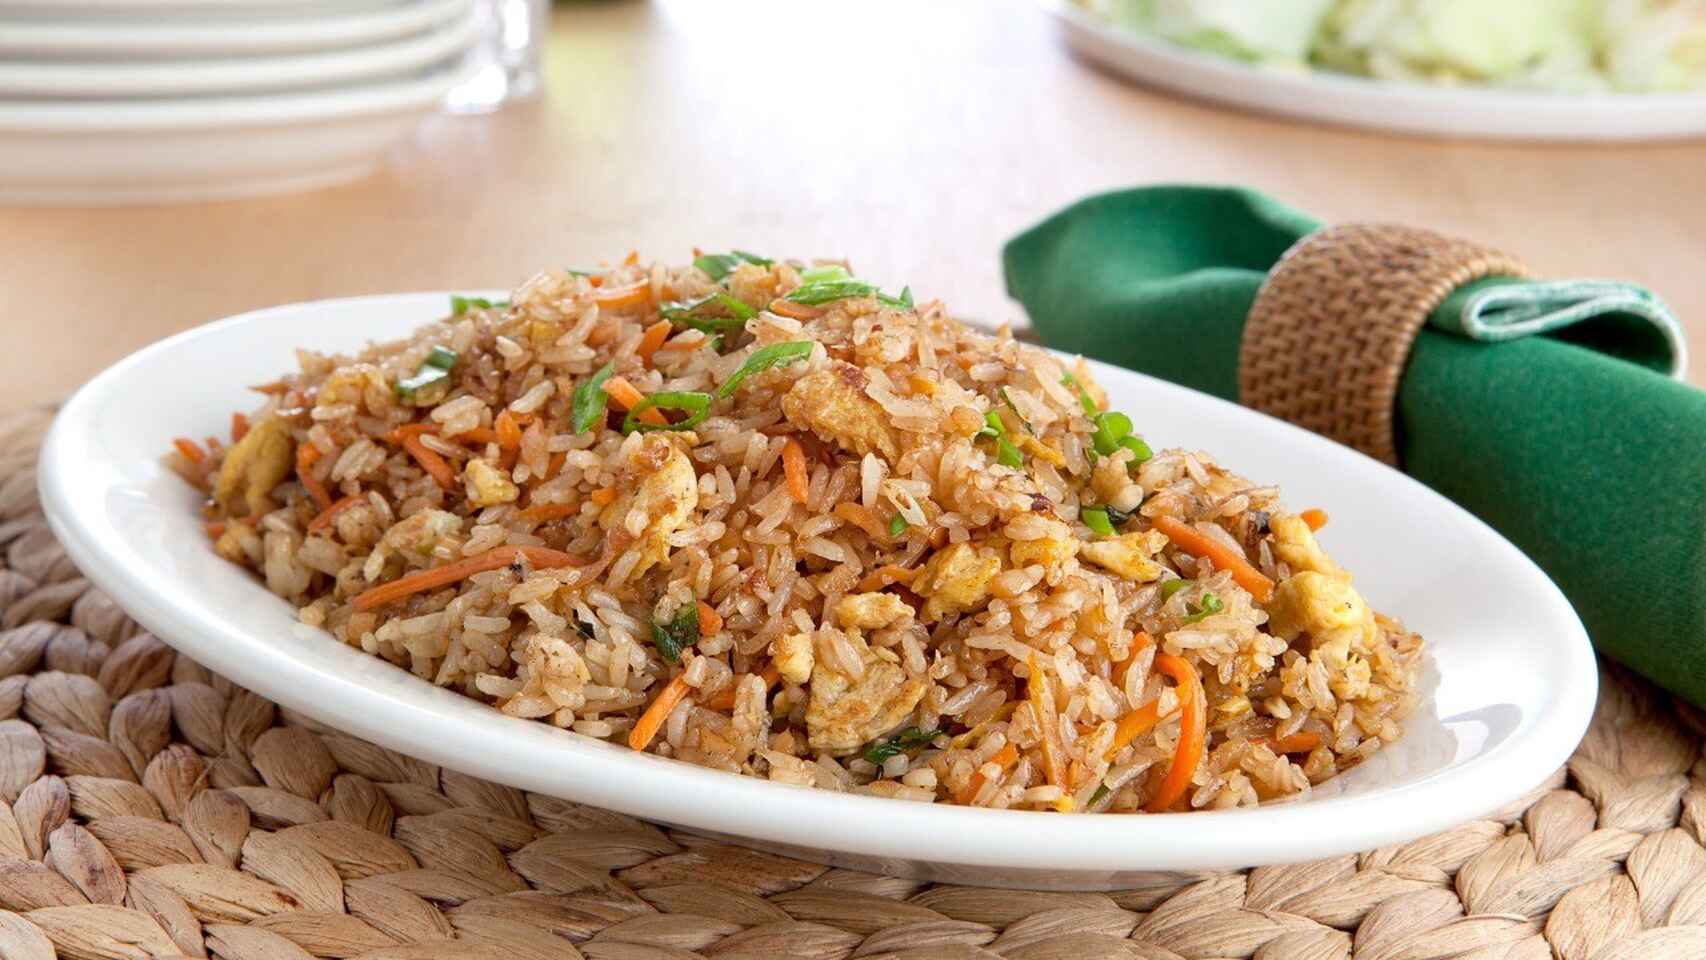 arroz frito con verduras salteadas - arroz frito con verduras salteadas